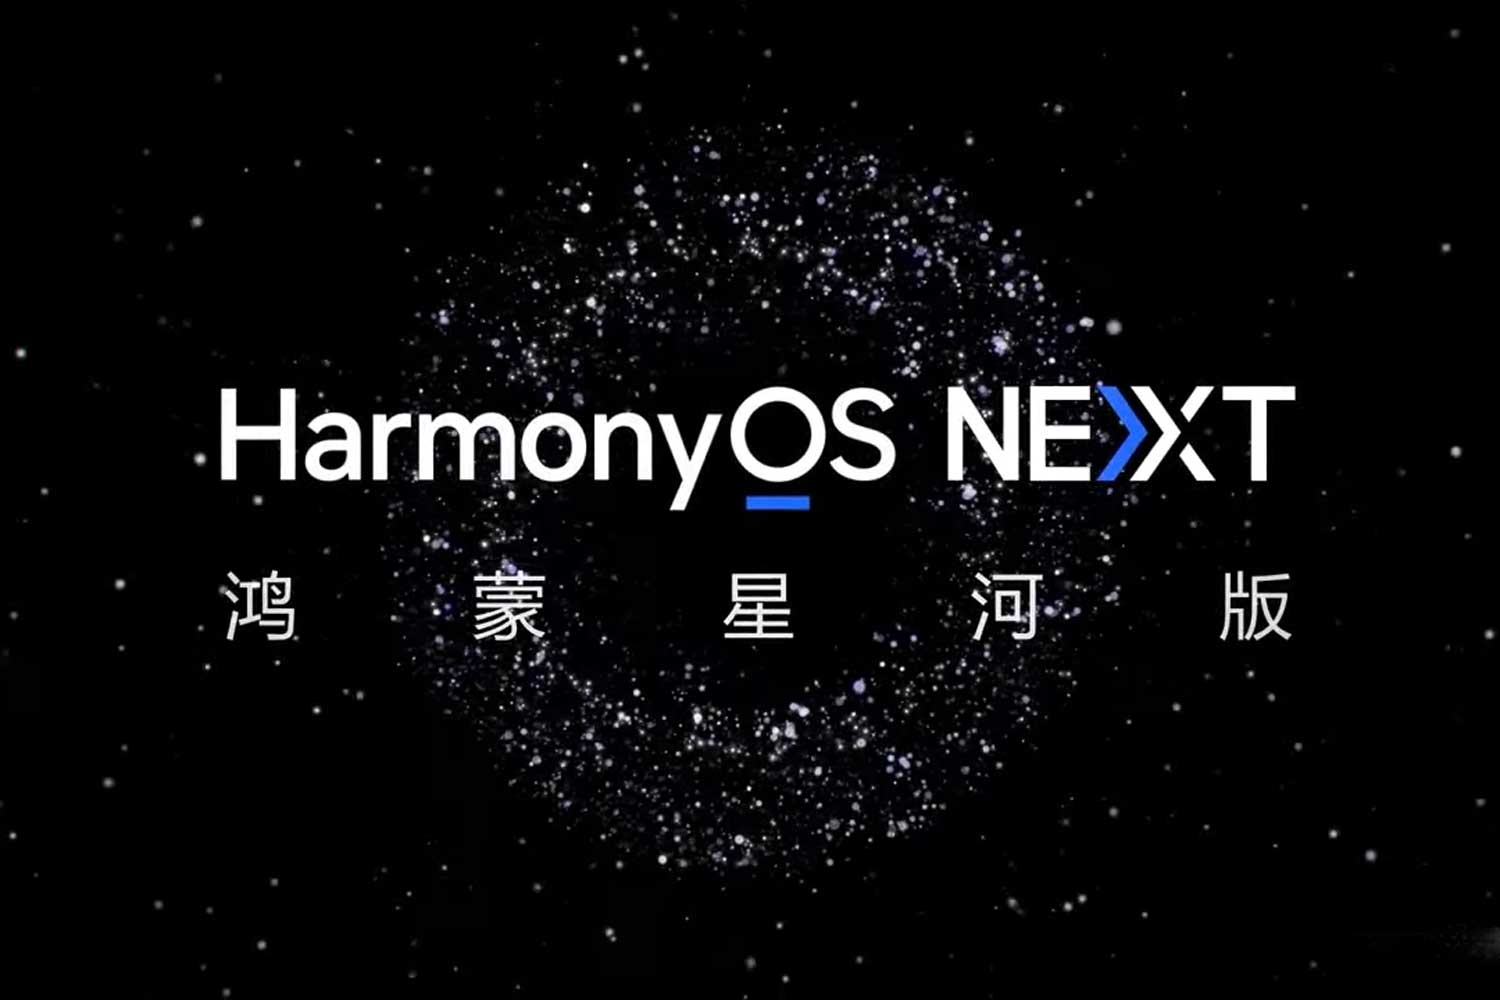 Huawei Harmonyos Next Introduction